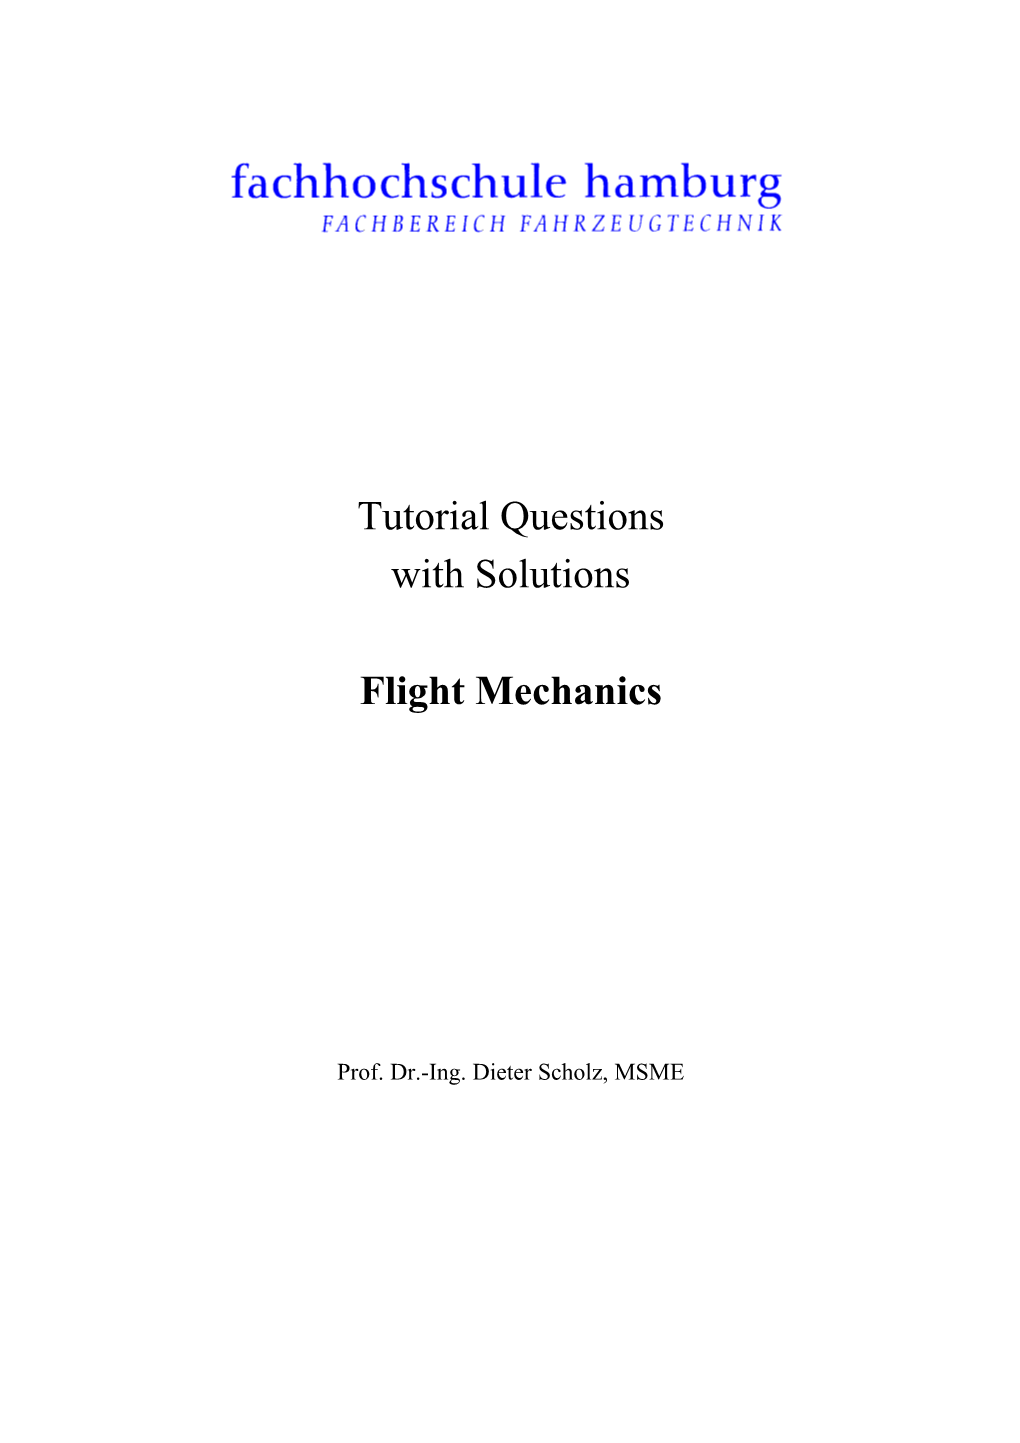 Tutorial Questions with Solutions Flight Mechanics